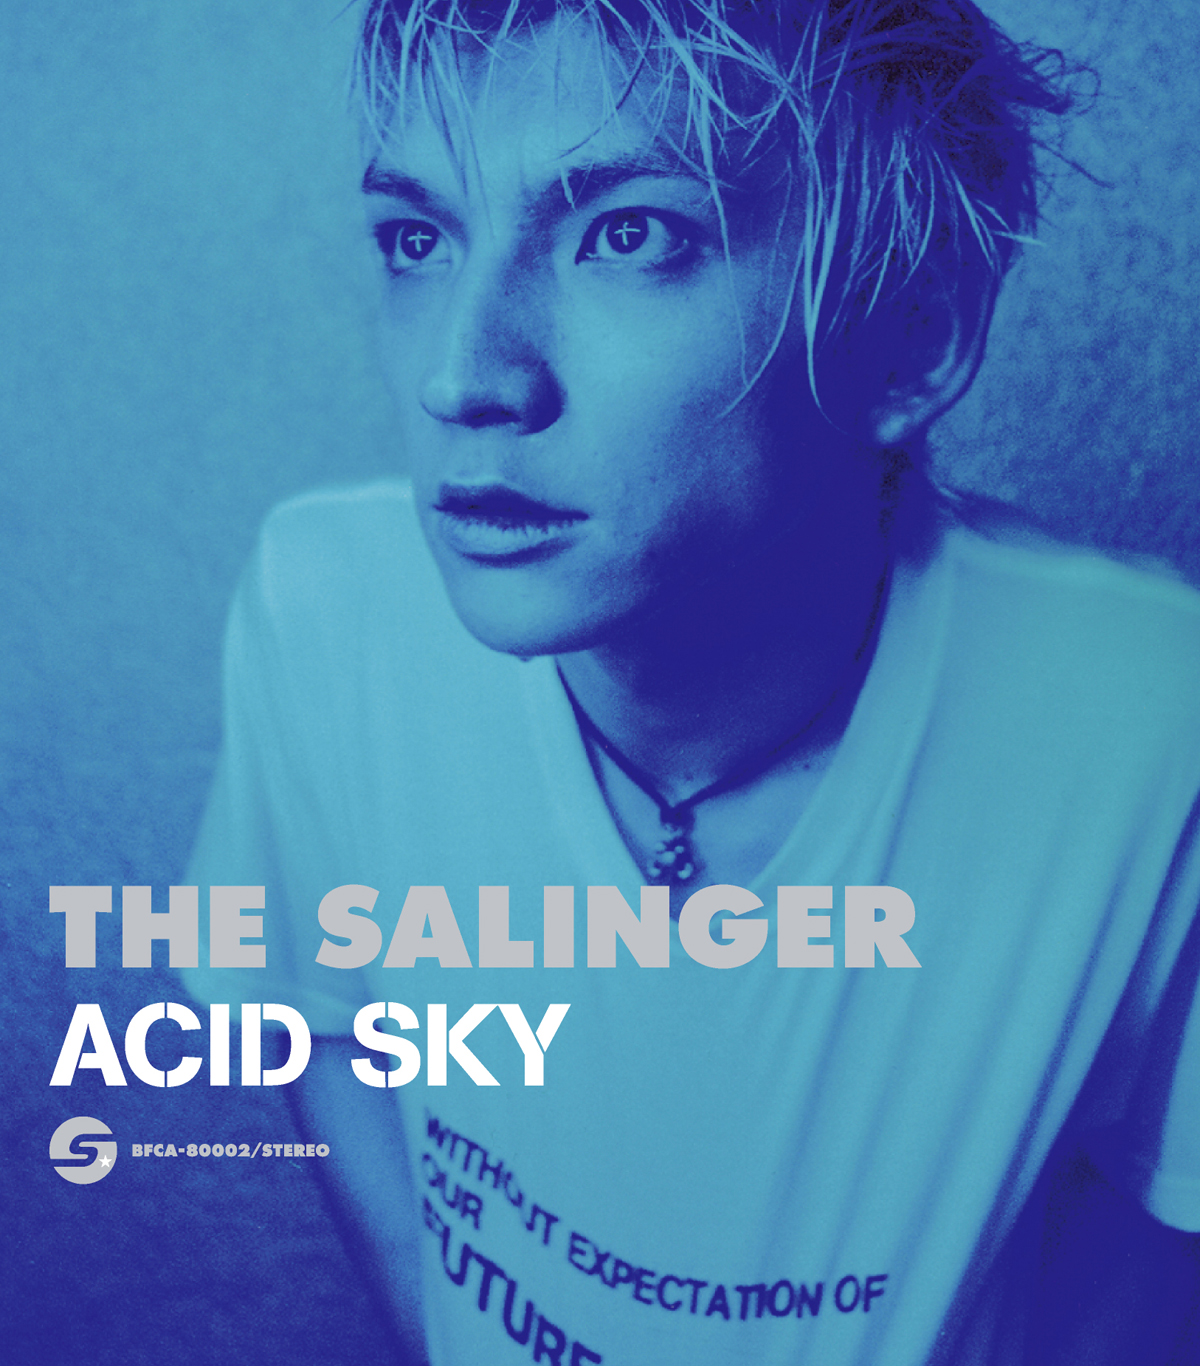 The Salinger “Acid Sky”